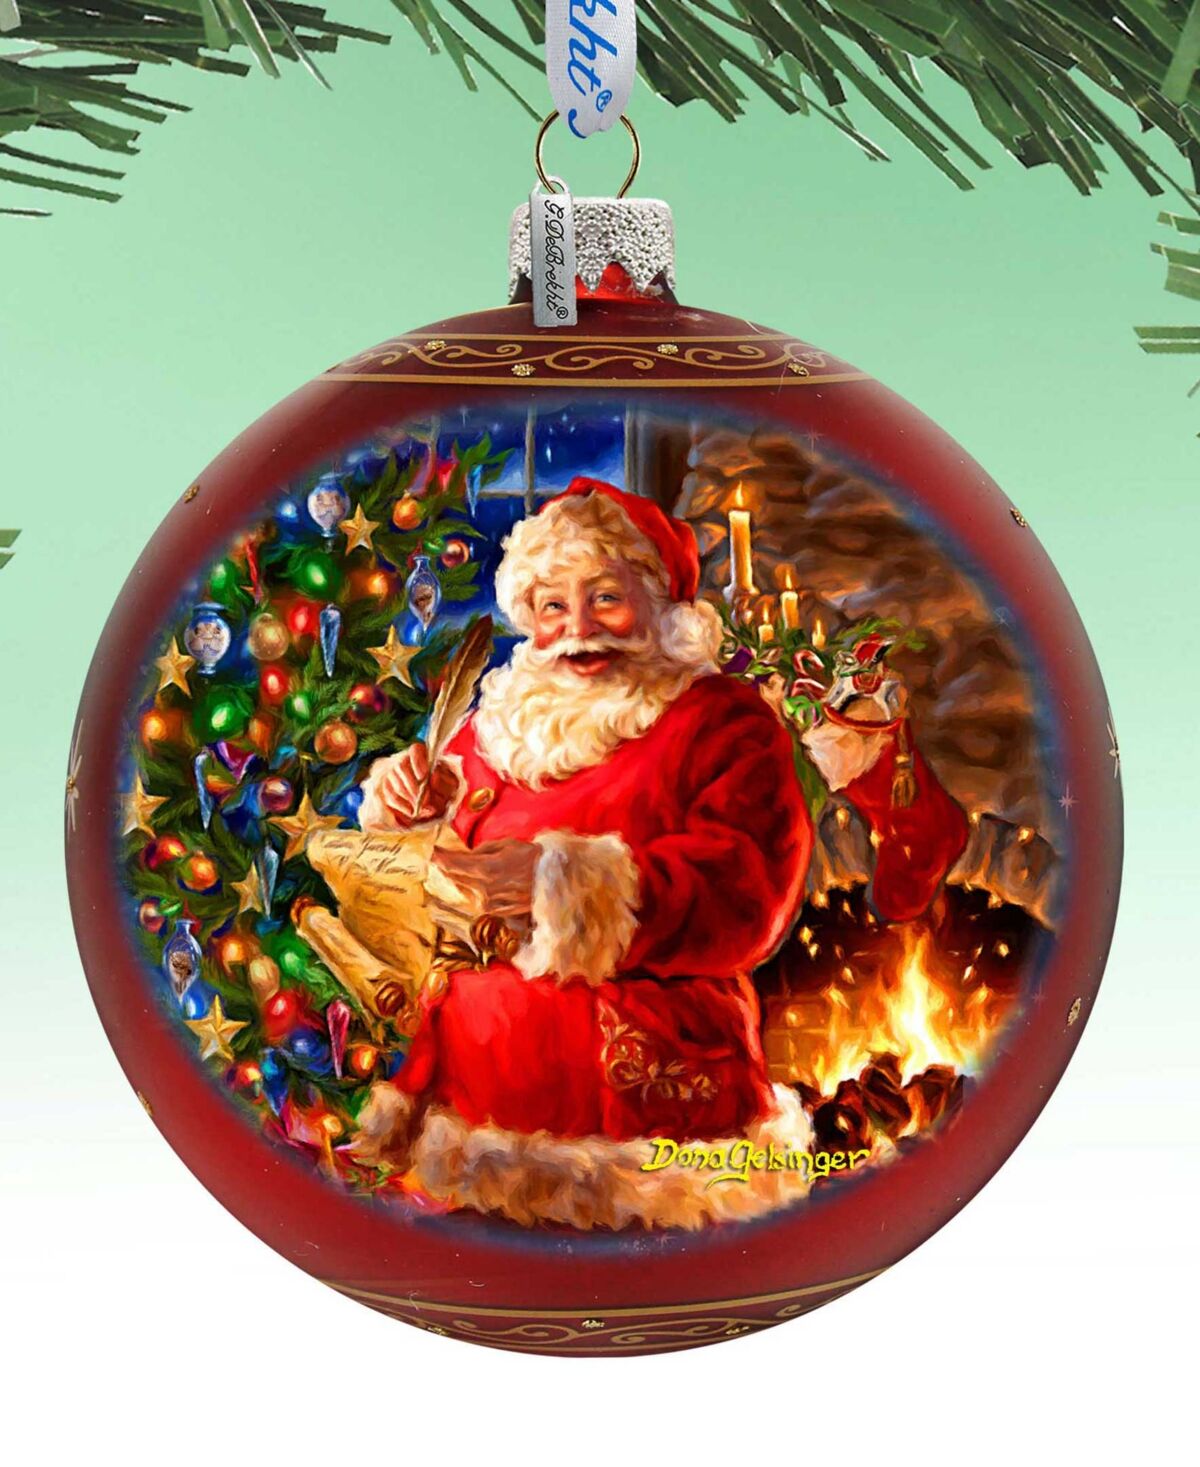 Designocracy Wish List Santa Large Holiday Glass Collectible Ornaments D. Gelsinger - Multi Color